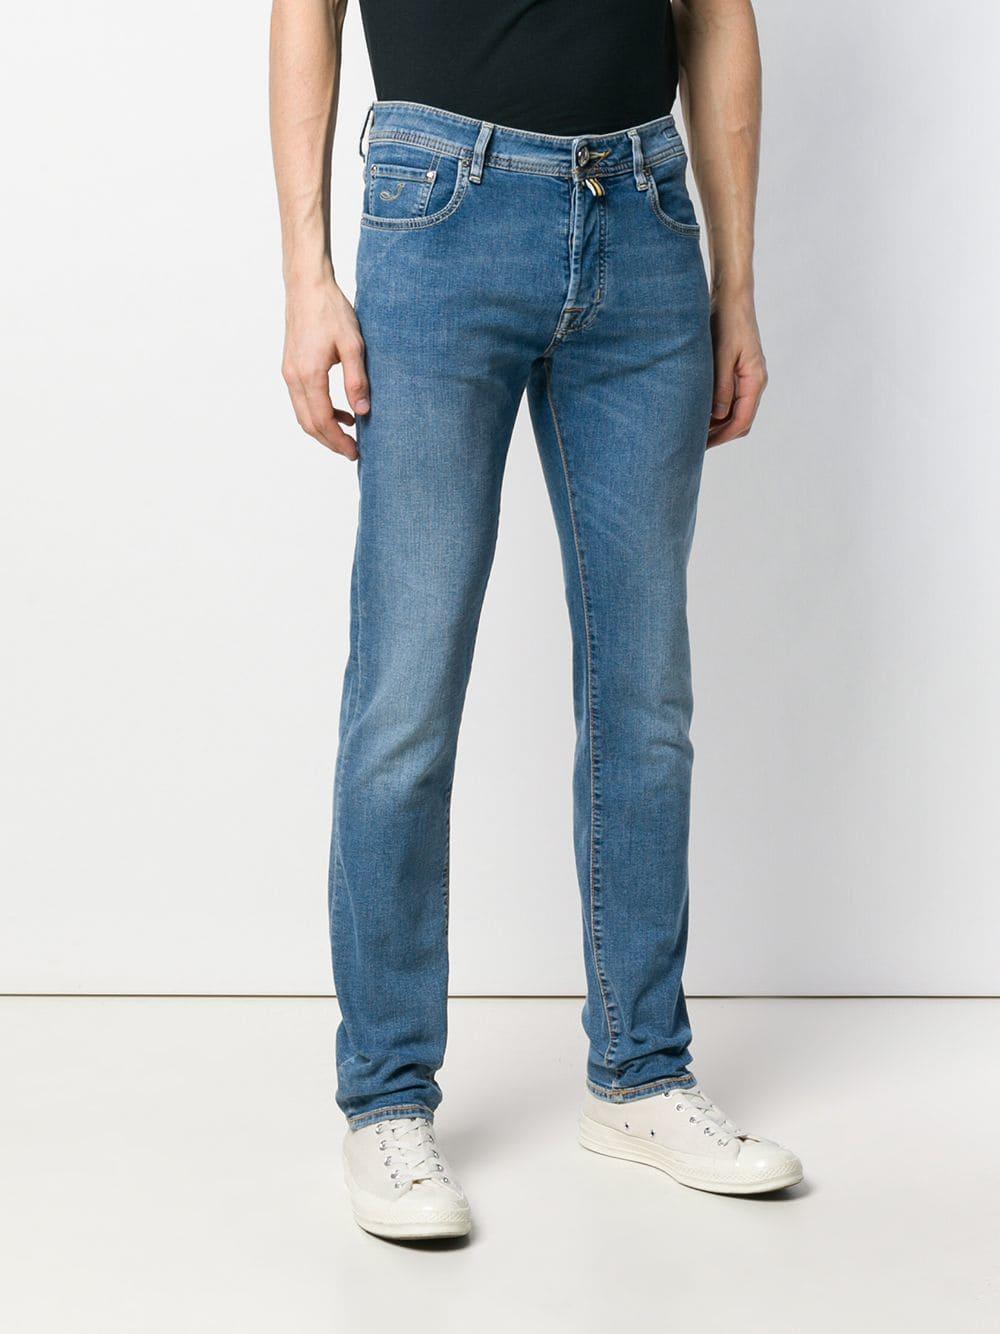 Jacob Cohen Denim Slim-fit Jeans With Pocket Square in Blue for Men - Lyst